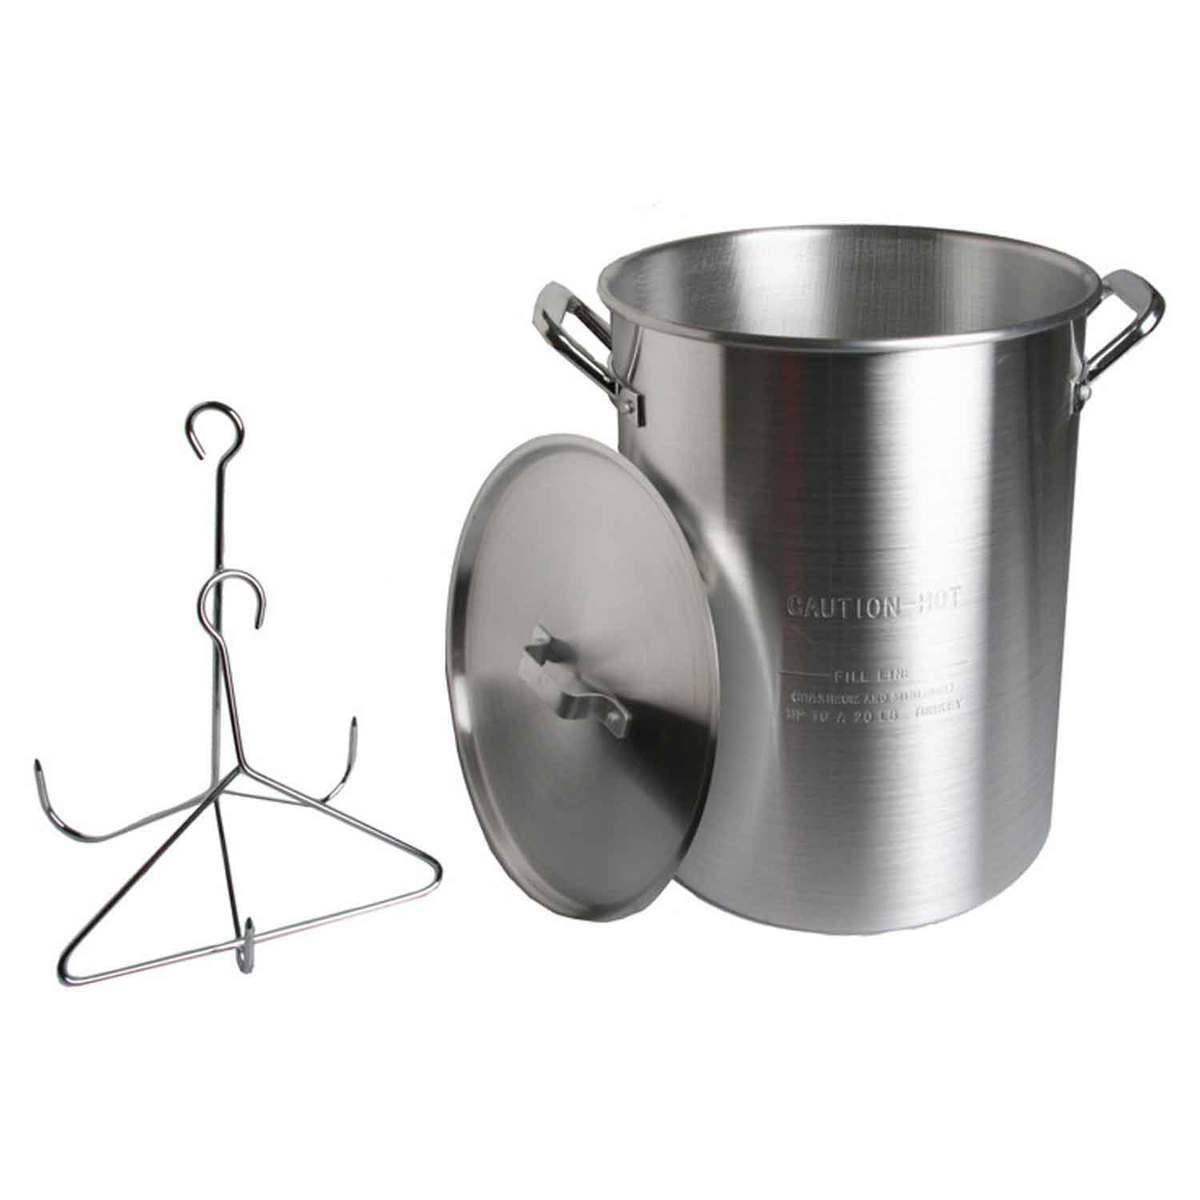 https://www.sportsmans.com/medias/kingkooker-30-quart-aluminum-turkey-pot-with-rack-hook-1261124-1.jpg?context=bWFzdGVyfGltYWdlc3w0NDExMHxpbWFnZS9qcGVnfGltYWdlcy9oMmIvaDcwLzk3MTY0MjA3MDYzMzQuanBnfDA4NTBmNTY5NzhkZGNmOTA5YmYwMTRhNmVjMzcwYTU2NjI3M2IzM2E3NjVjNzA0MDUyZjU5MGUwODI5MmYyY2E